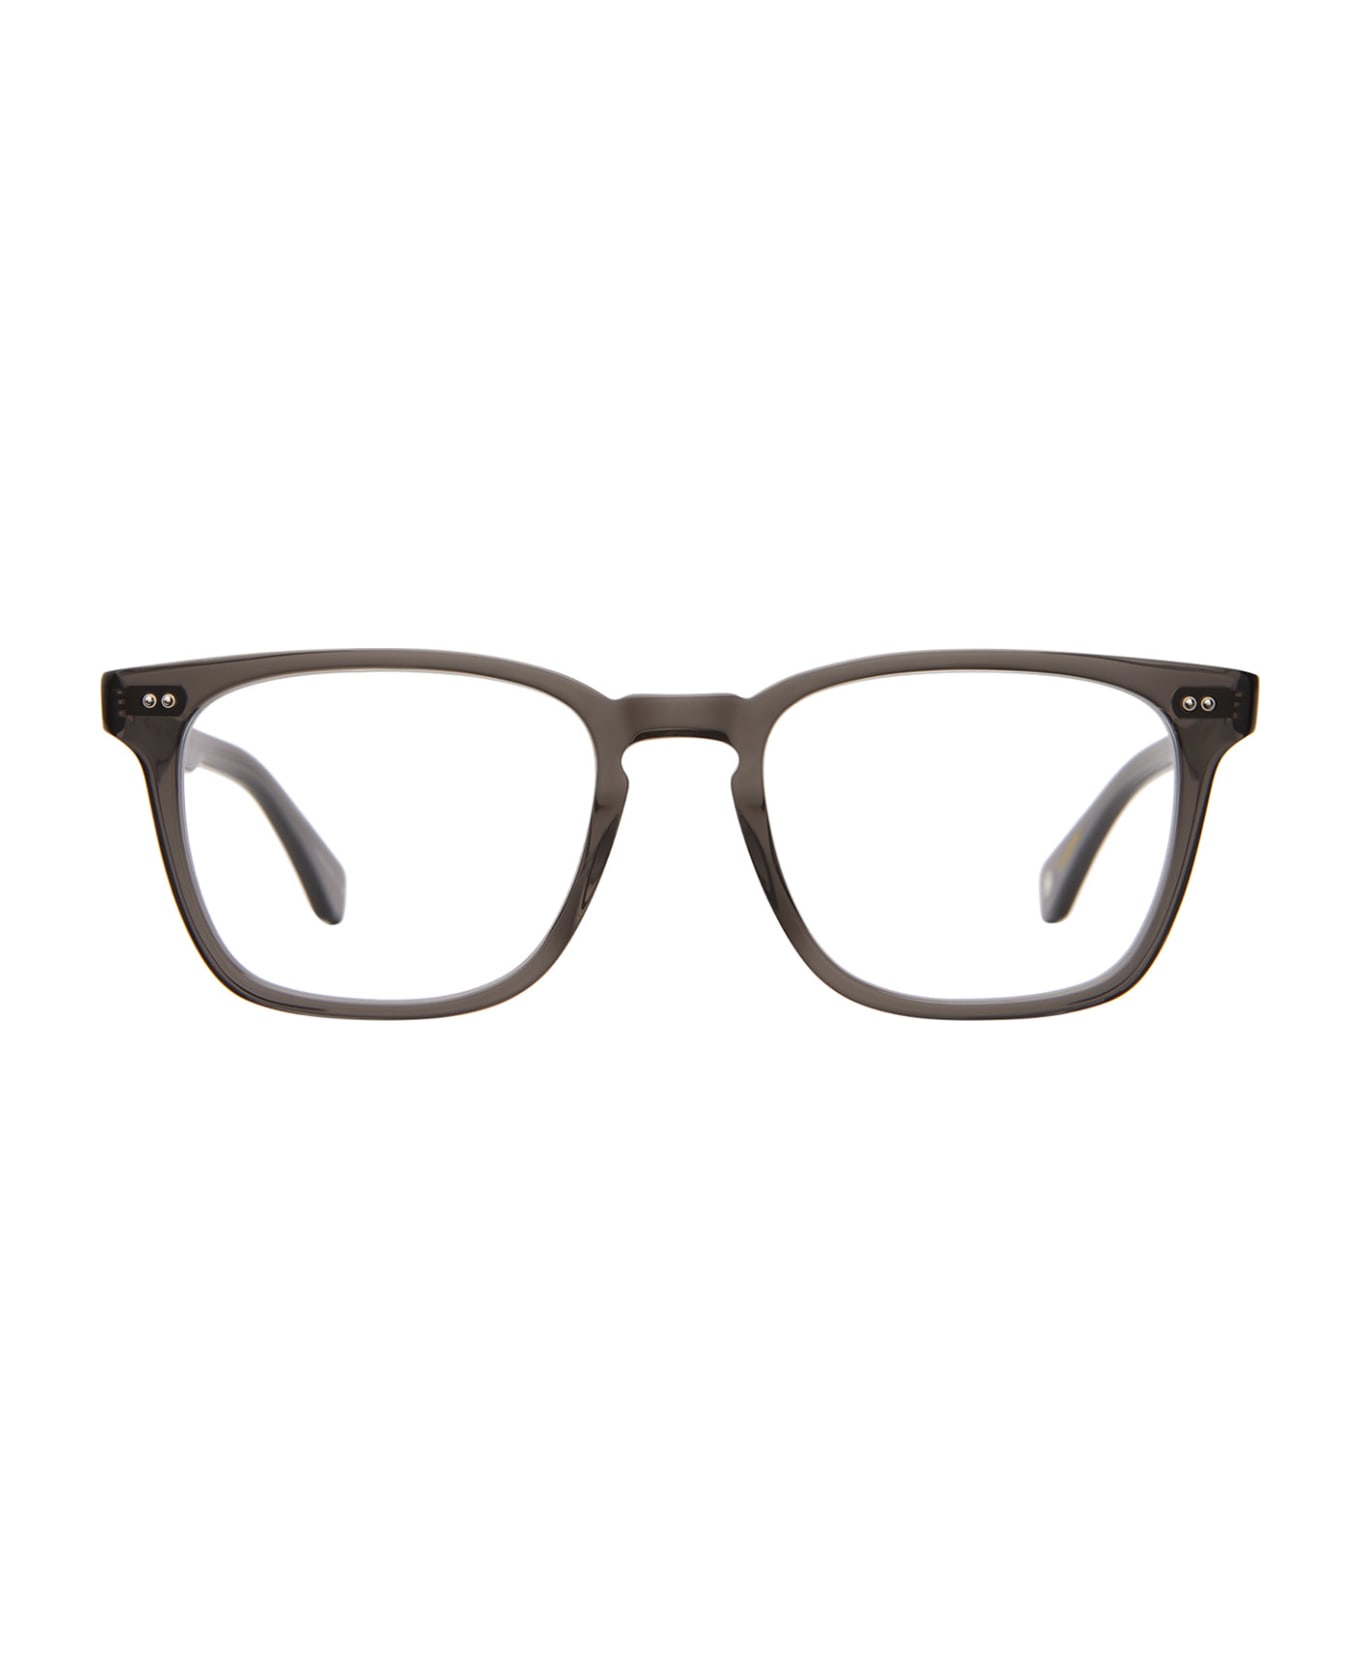 Garrett Leight Earvin Bio Charcoal Glasses - Bio Charcoal